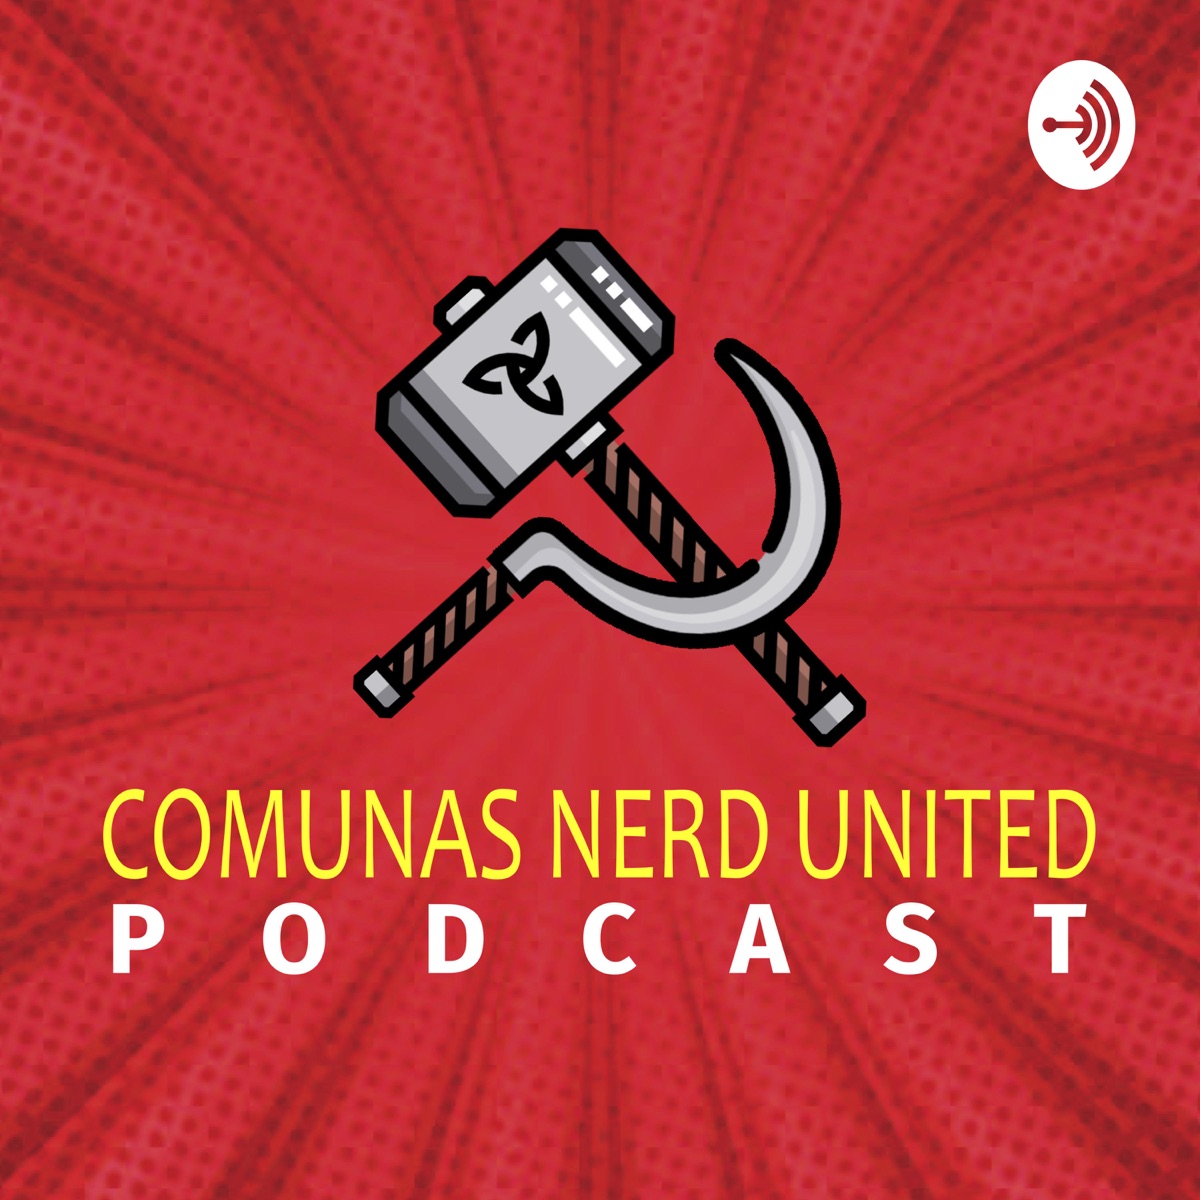 UNITEDcast – Podcast – Podtail